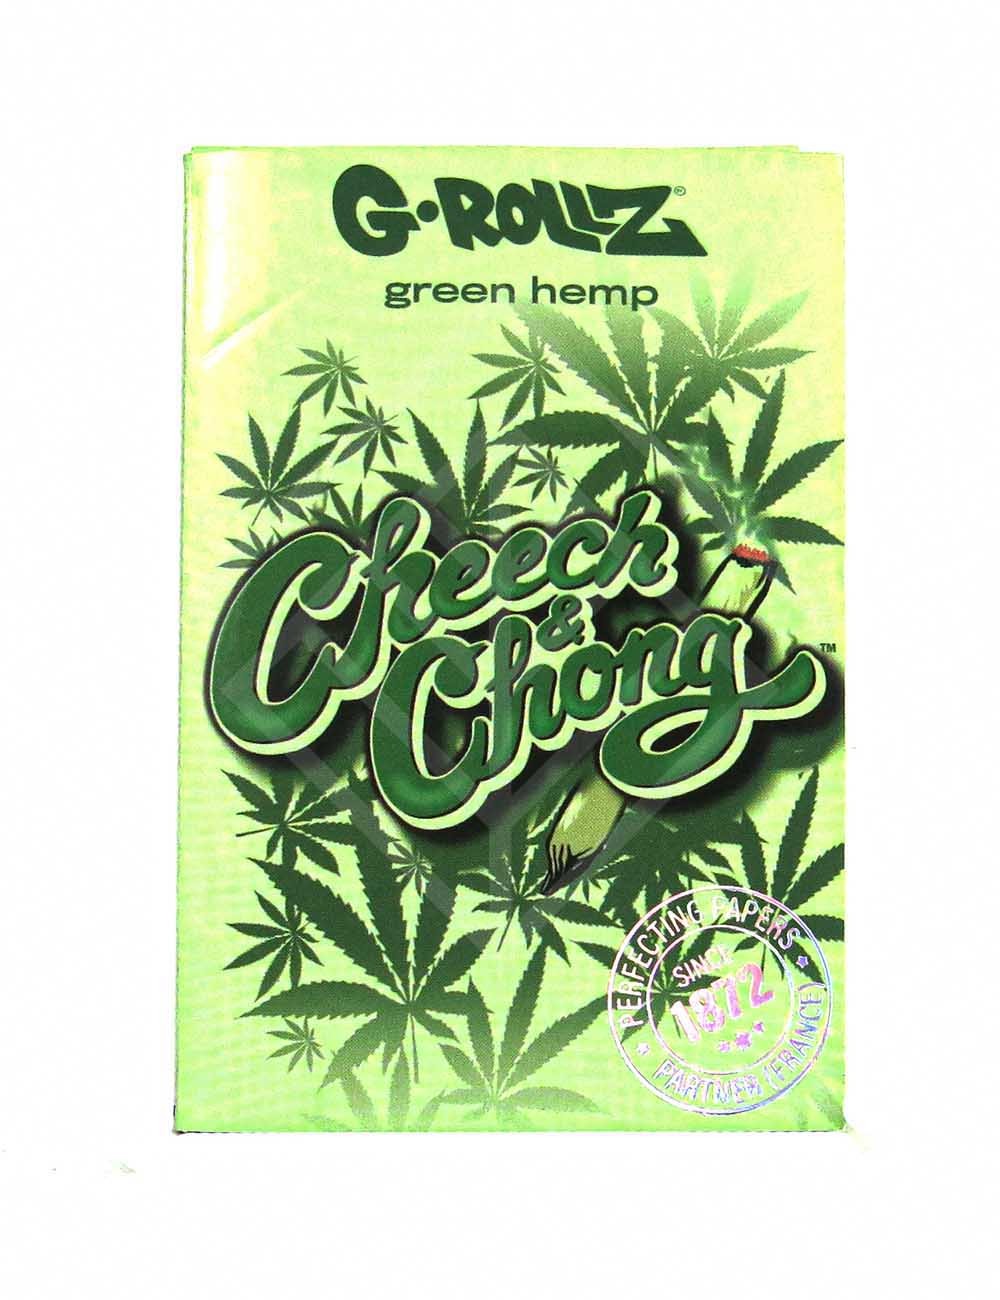 G-ROLLZ | Cheech & Chong(TM) - Organic Green Hemp - 50 '1¼' Papers + Tips & Tray